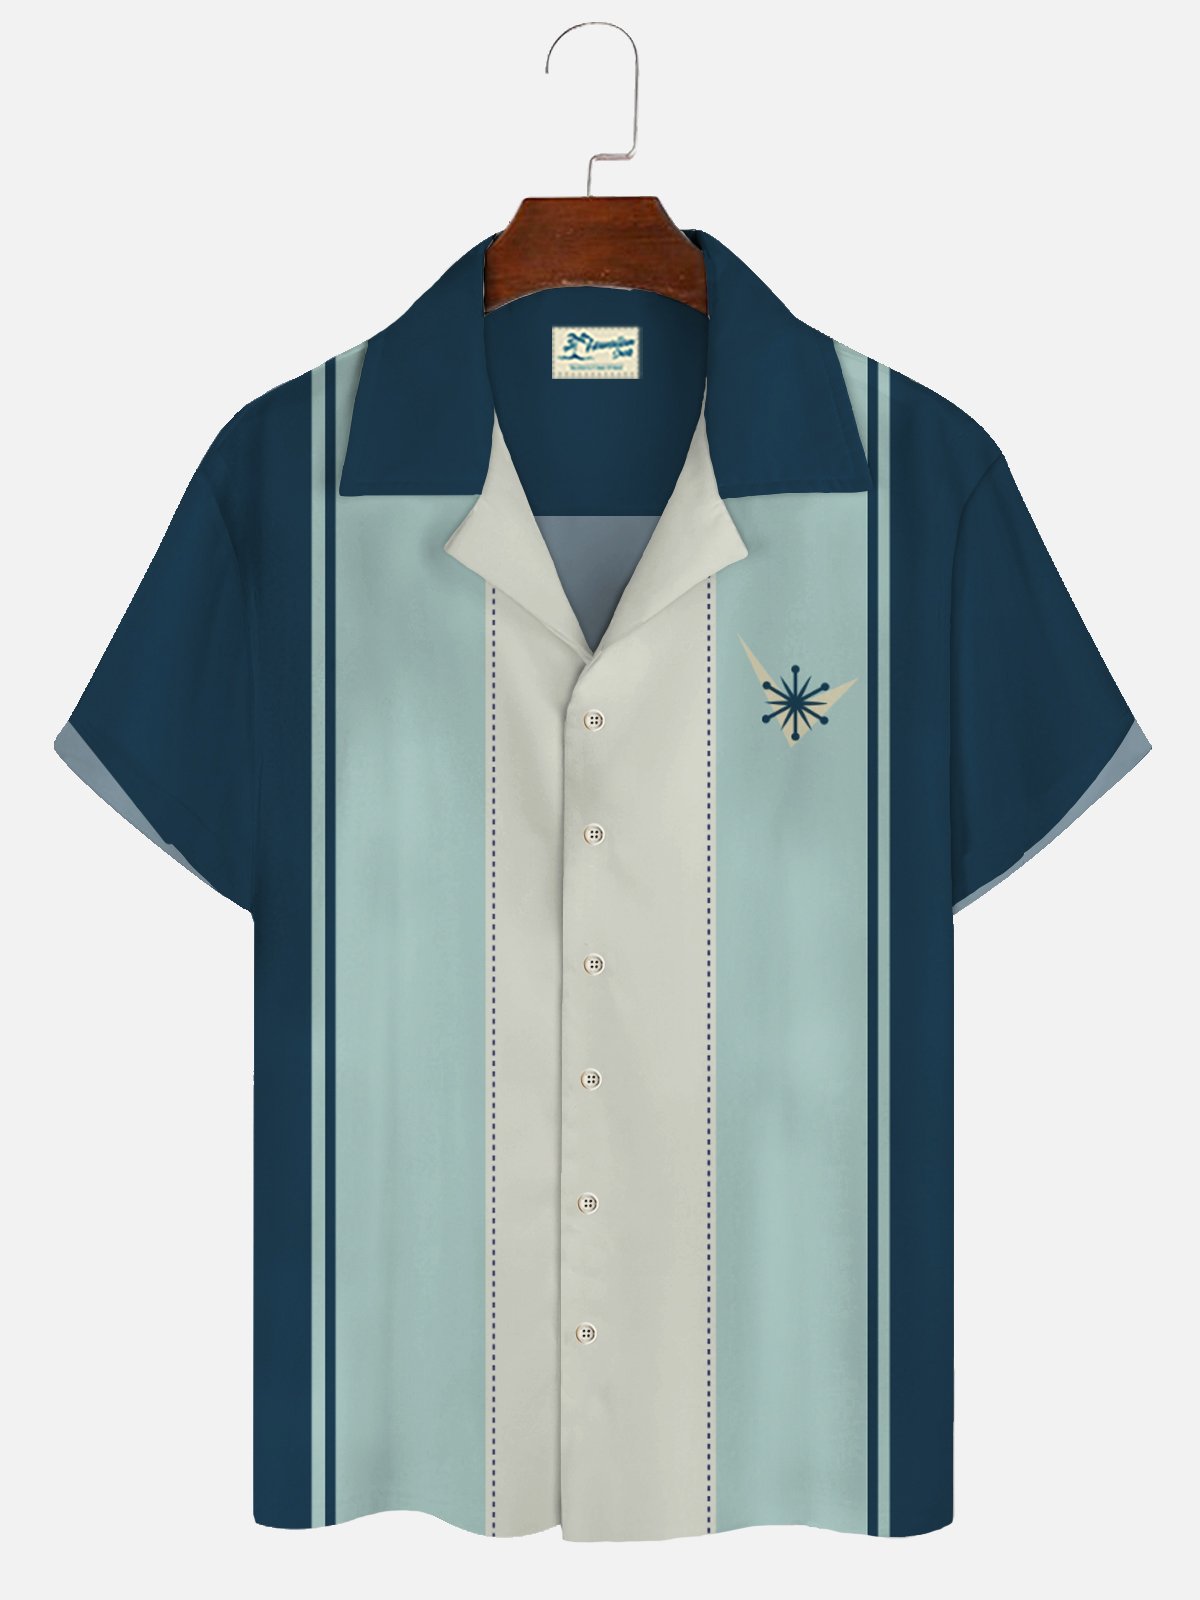 Royaura 50s Retro Bowling Shirts Geometric Art Oversized Striped Stretch Aloha Shirts